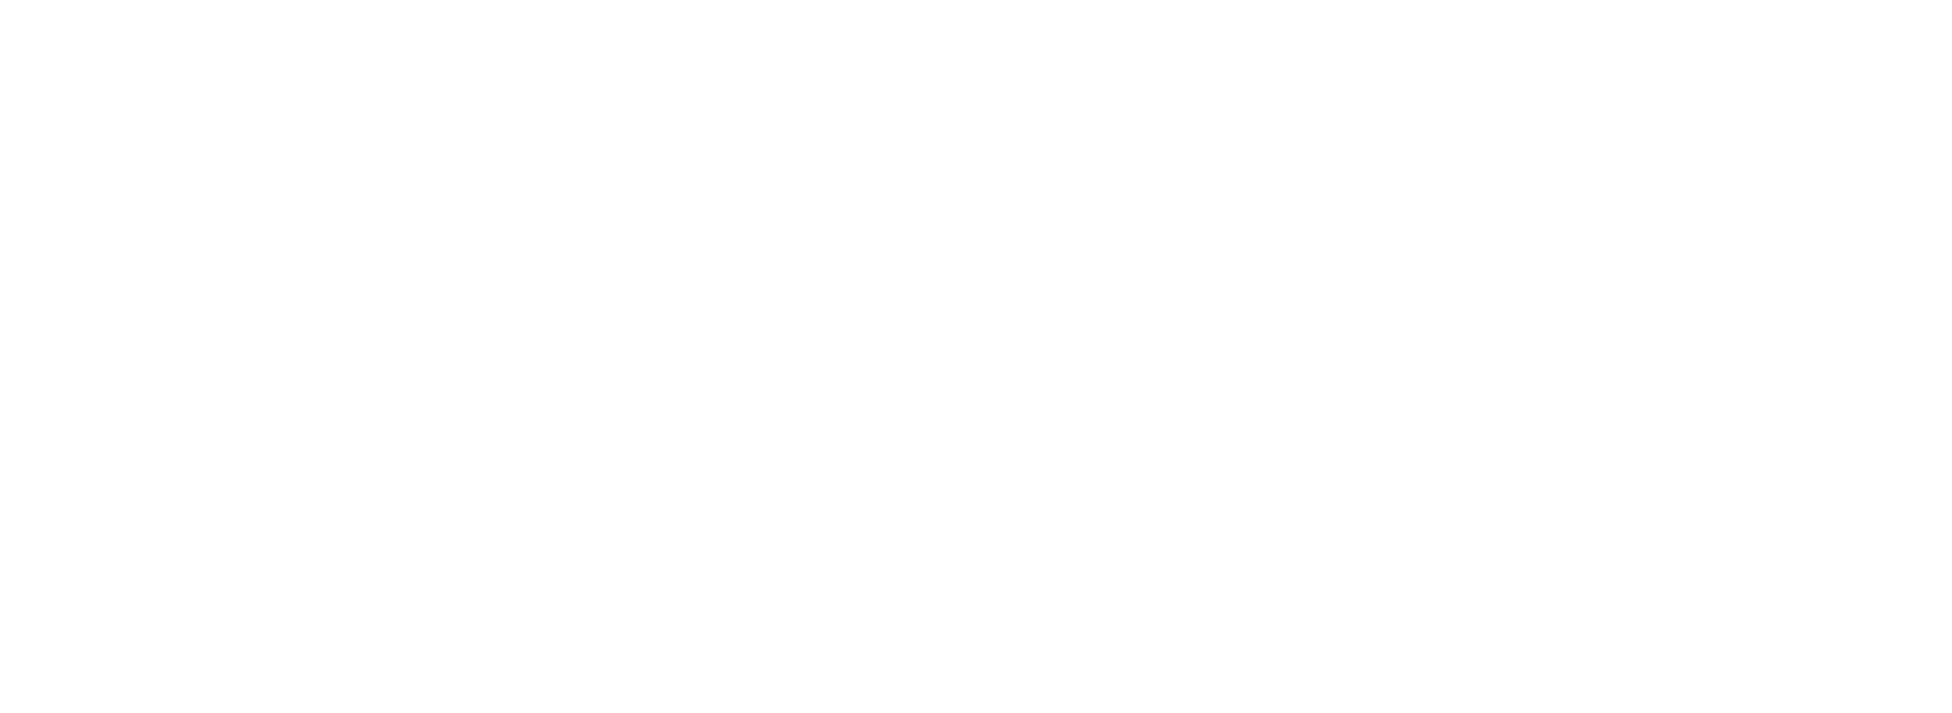 The Murray Insurance Agency